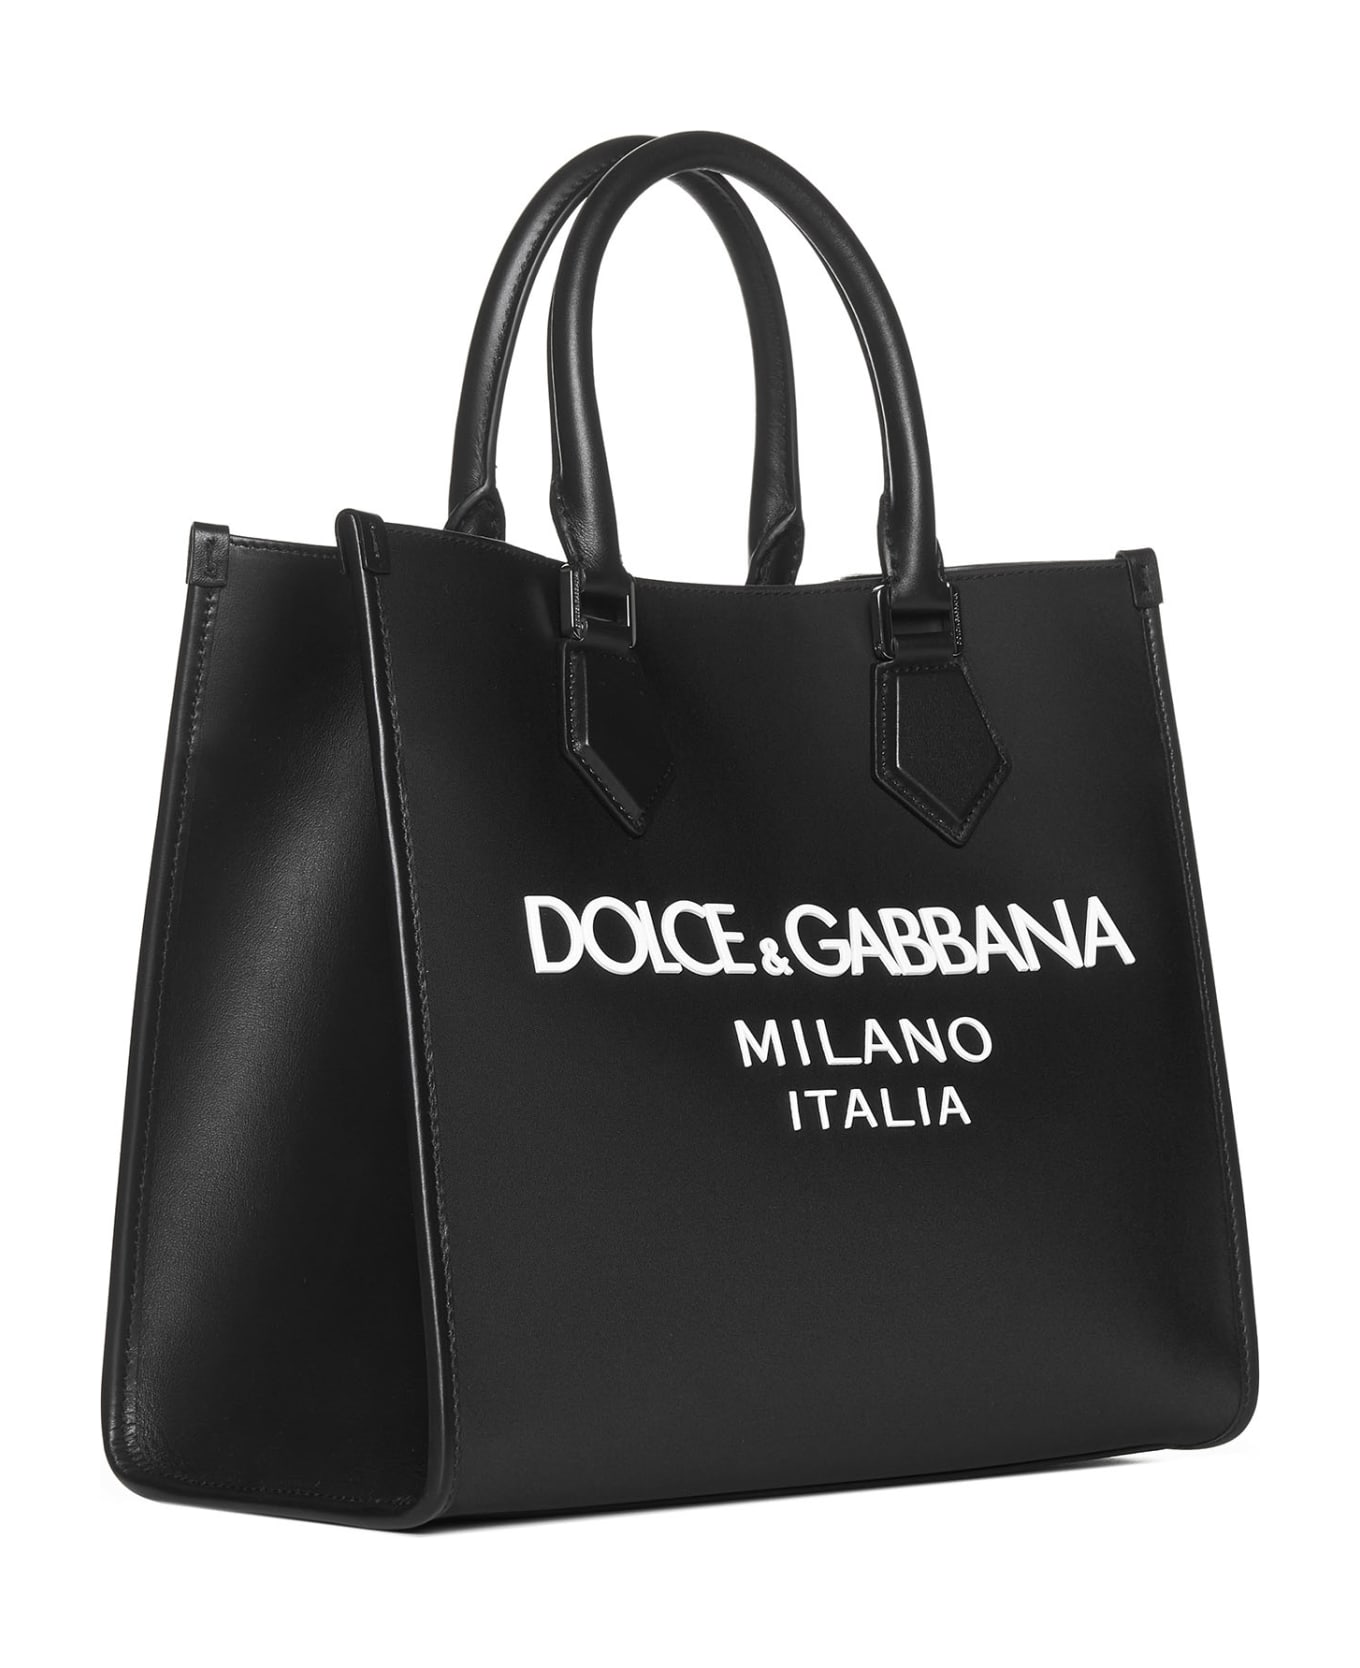 Dolce & Gabbana Logo Shopping Bag - Nero/nero